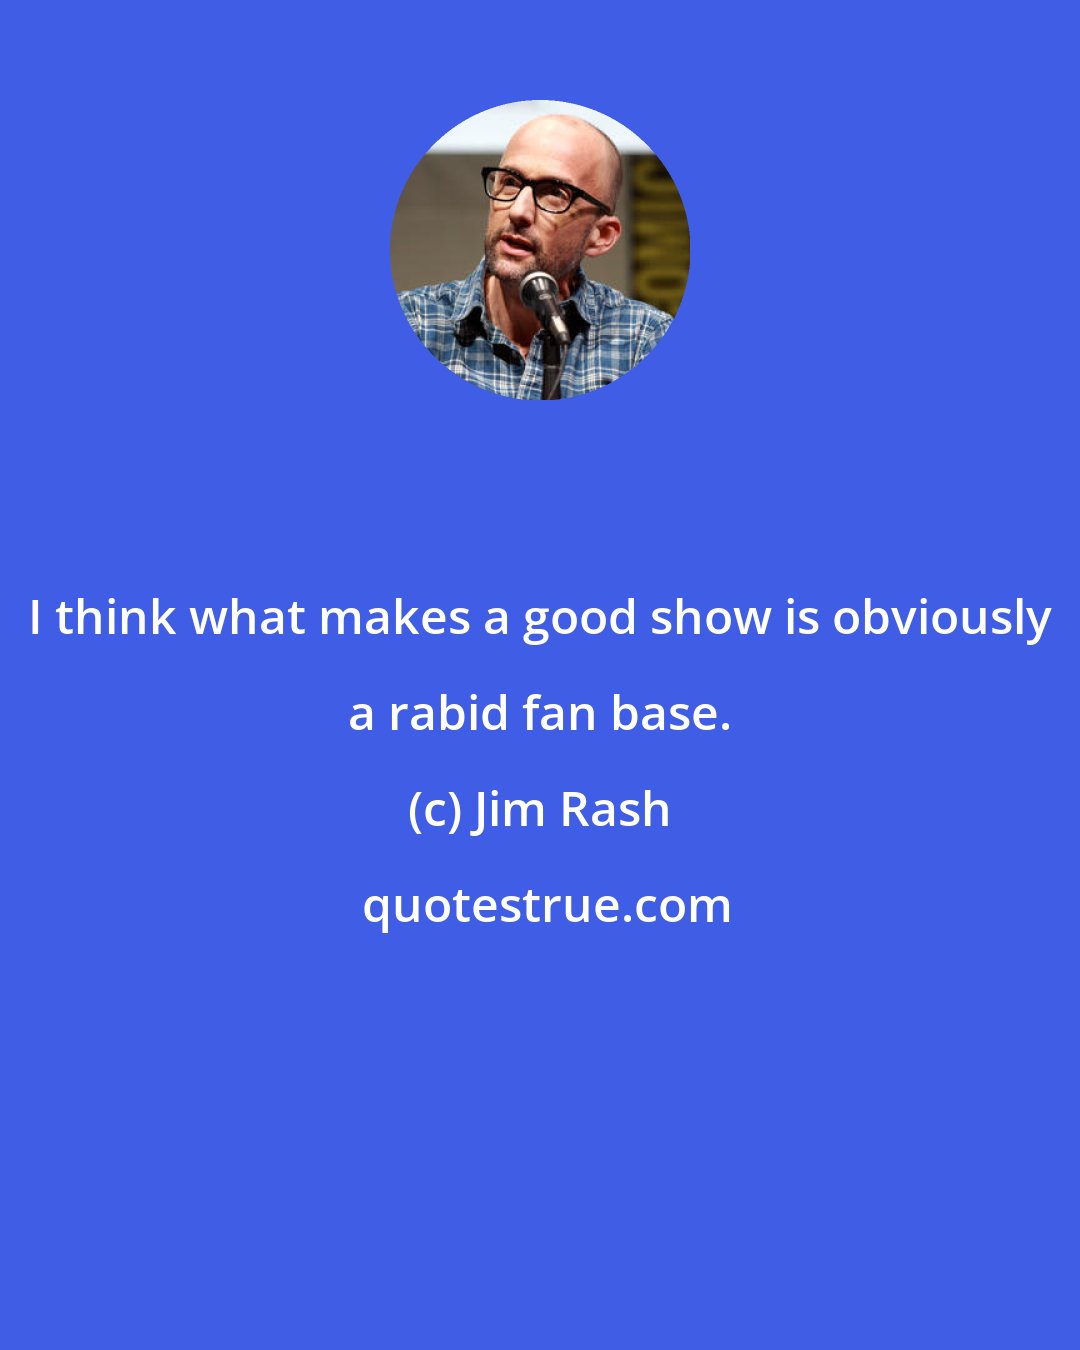 Jim Rash: I think what makes a good show is obviously a rabid fan base.